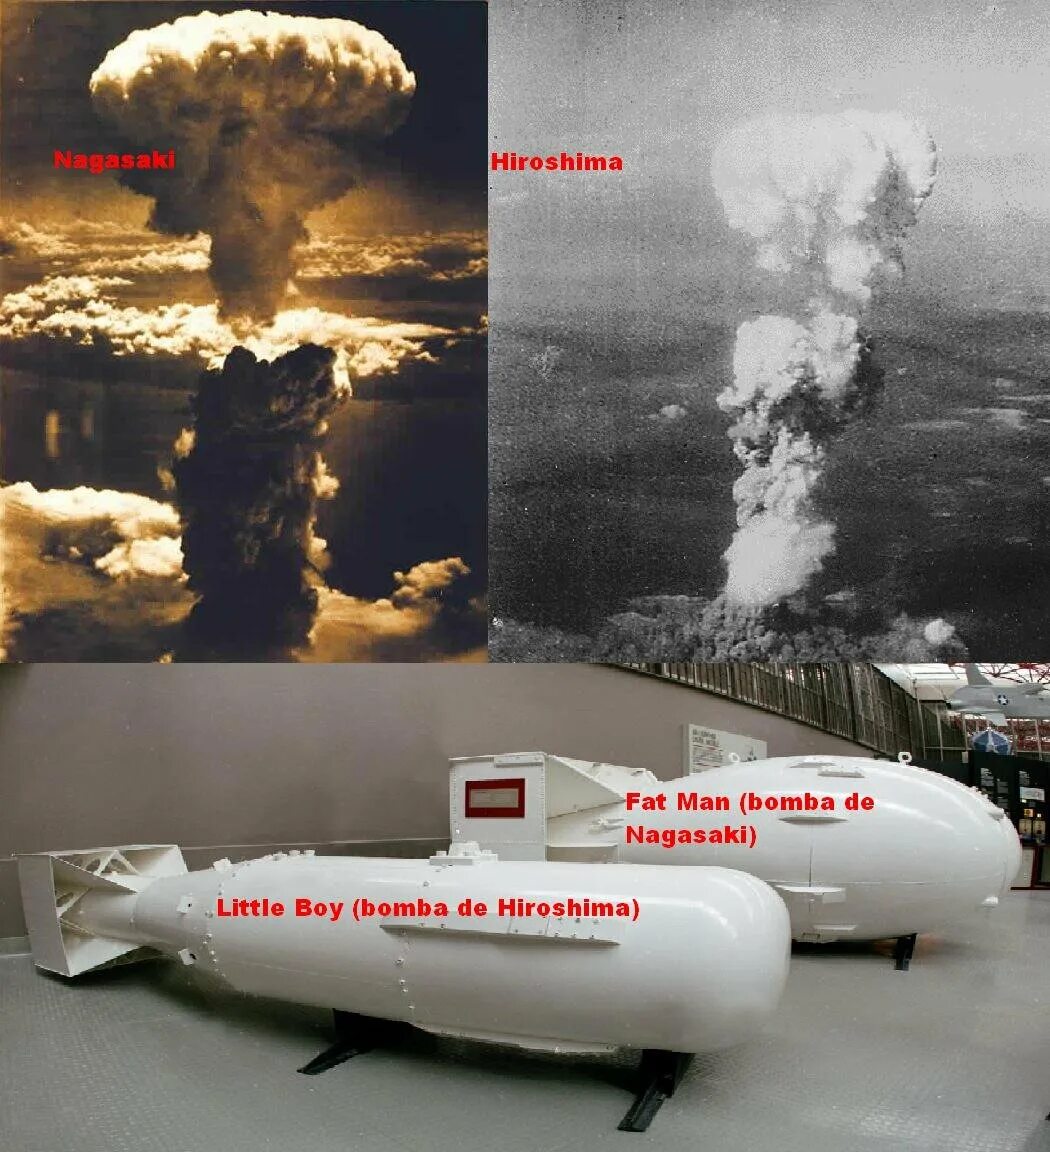 Хиросима и Нагасаки атомная бомба. Нагасаки и Хиросима США атамнойьомба. Ядерное оружие США Хиросима Нагасаки. Япония 1945 Хиросима и Нагасаки.